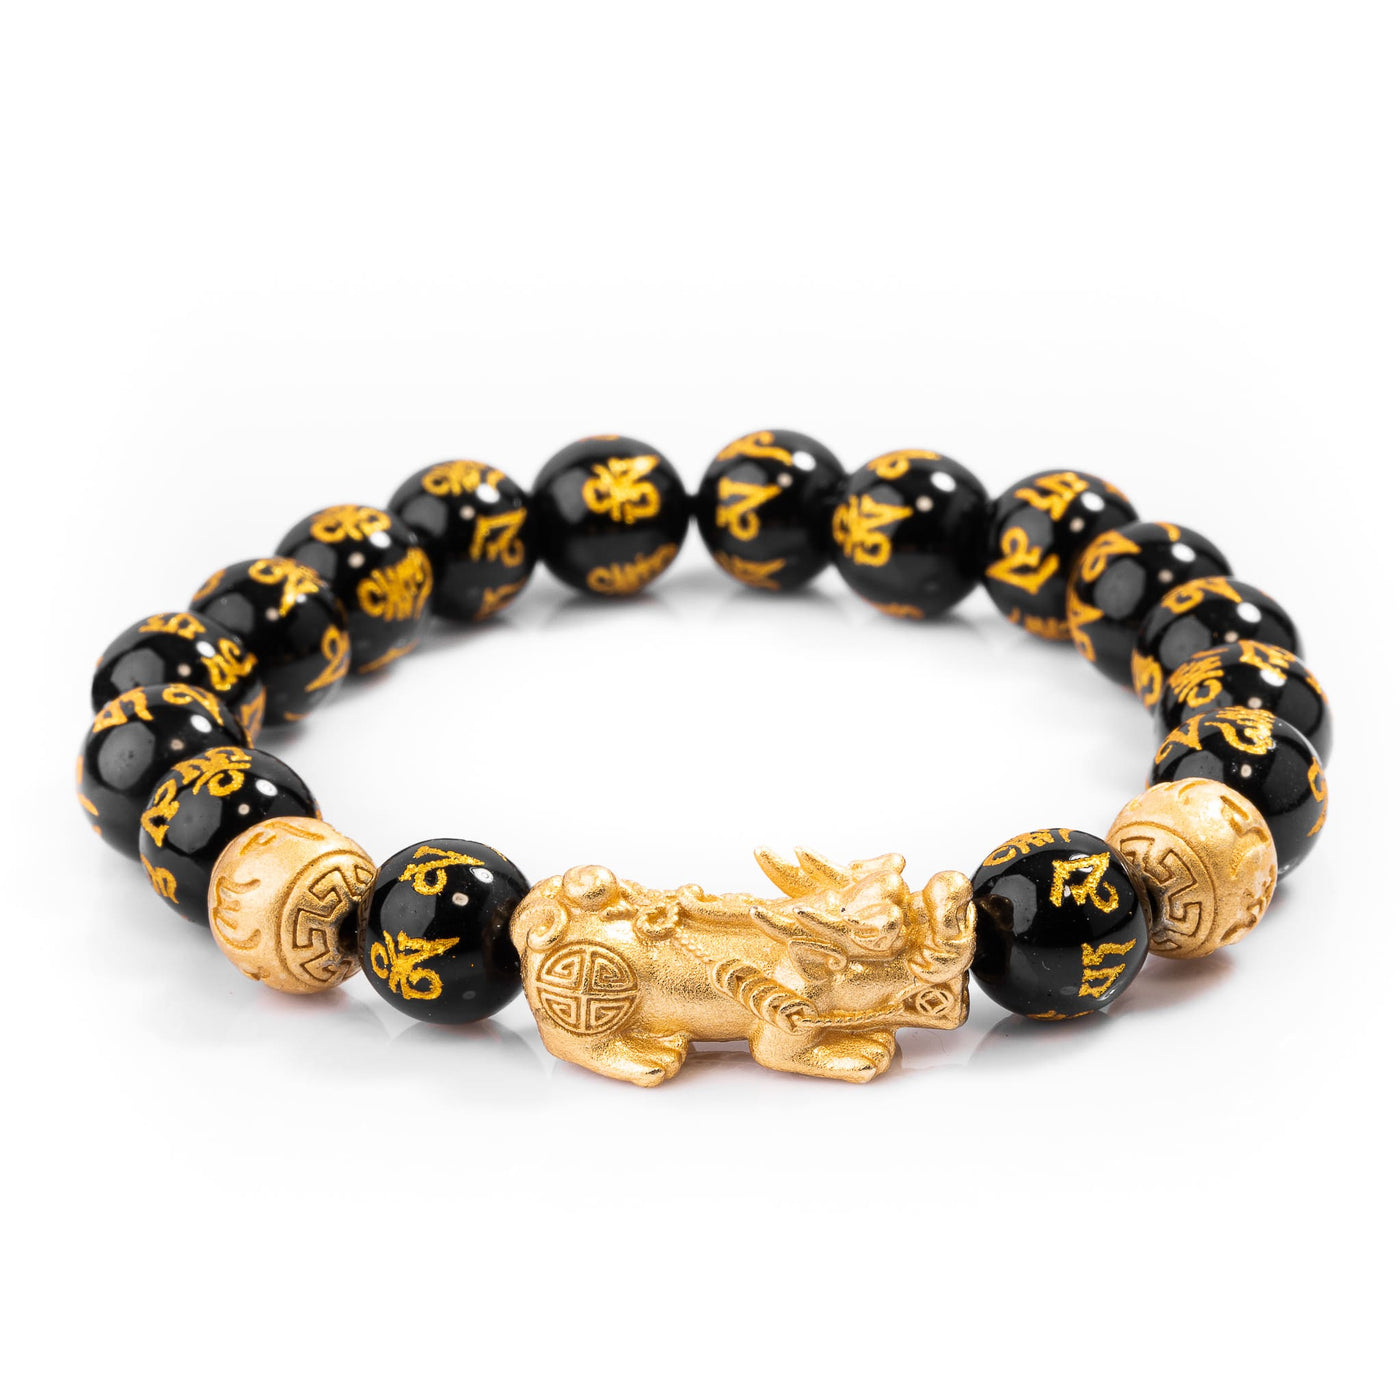 Feng Shui Pixiu Black Obsidian Wealth Bracelet - Attract Wealth - Buddha & Karma